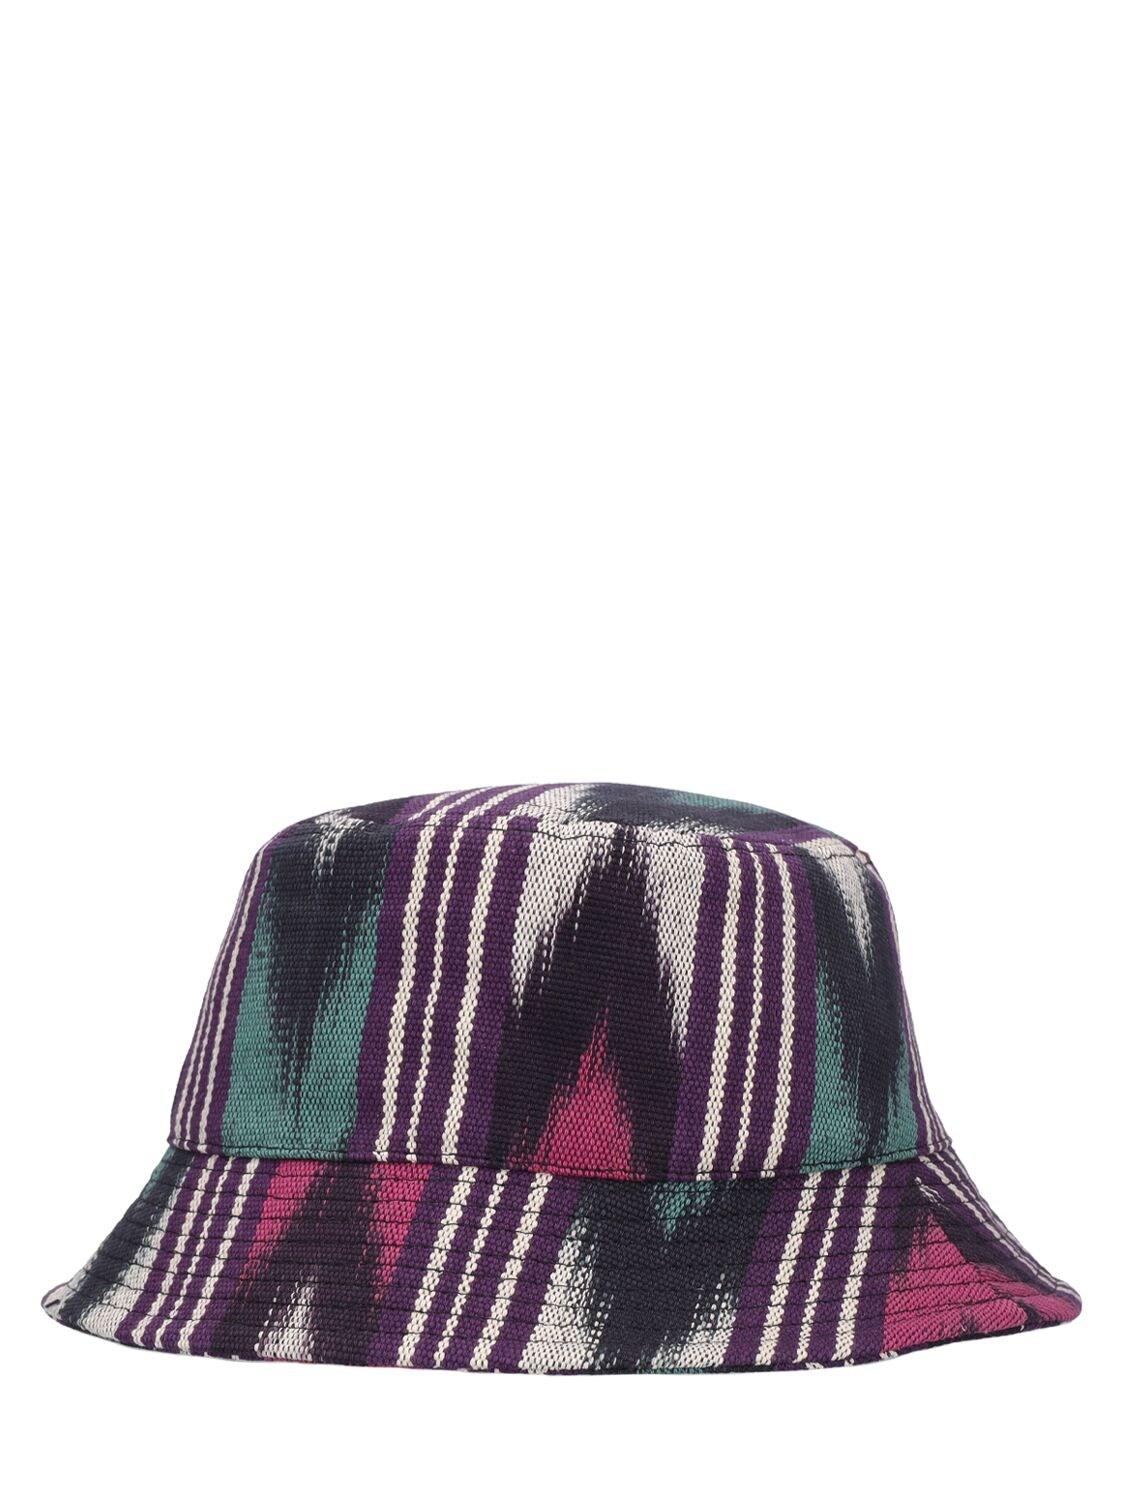 Haley Reversible Print Cotton Bucket Hat Luisaviaroma Women Accessories Headwear Hats 